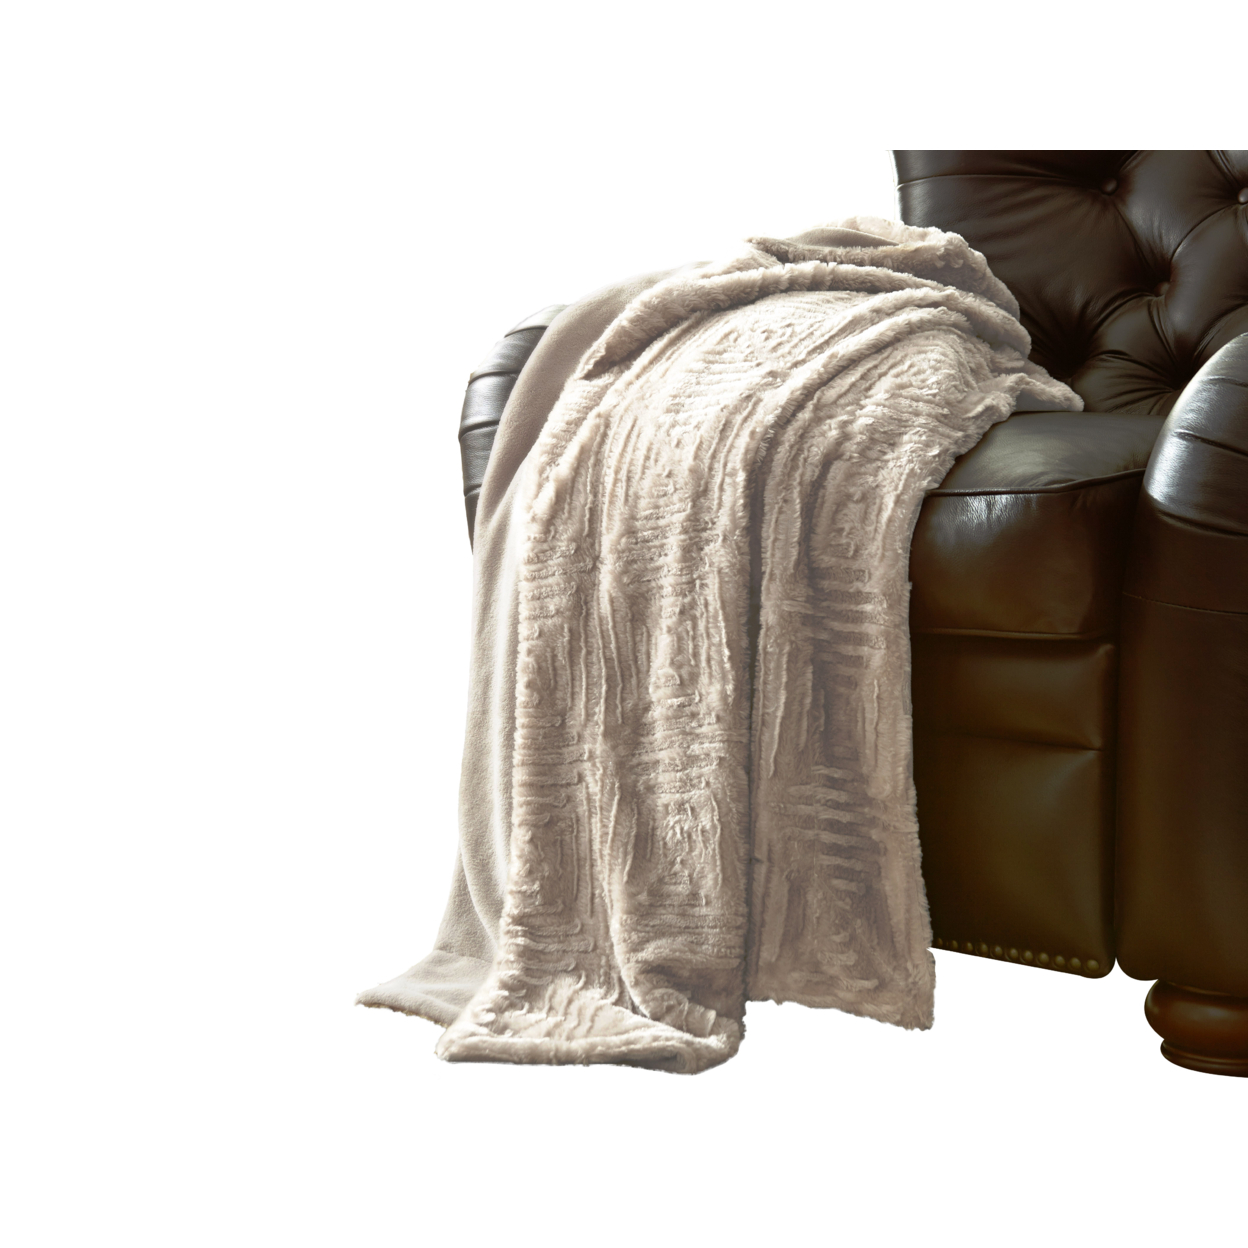 60 Inch Throw Blanket, Faux Fur, Fretted Design, Machine Washable, Cream- Saltoro Sherpi